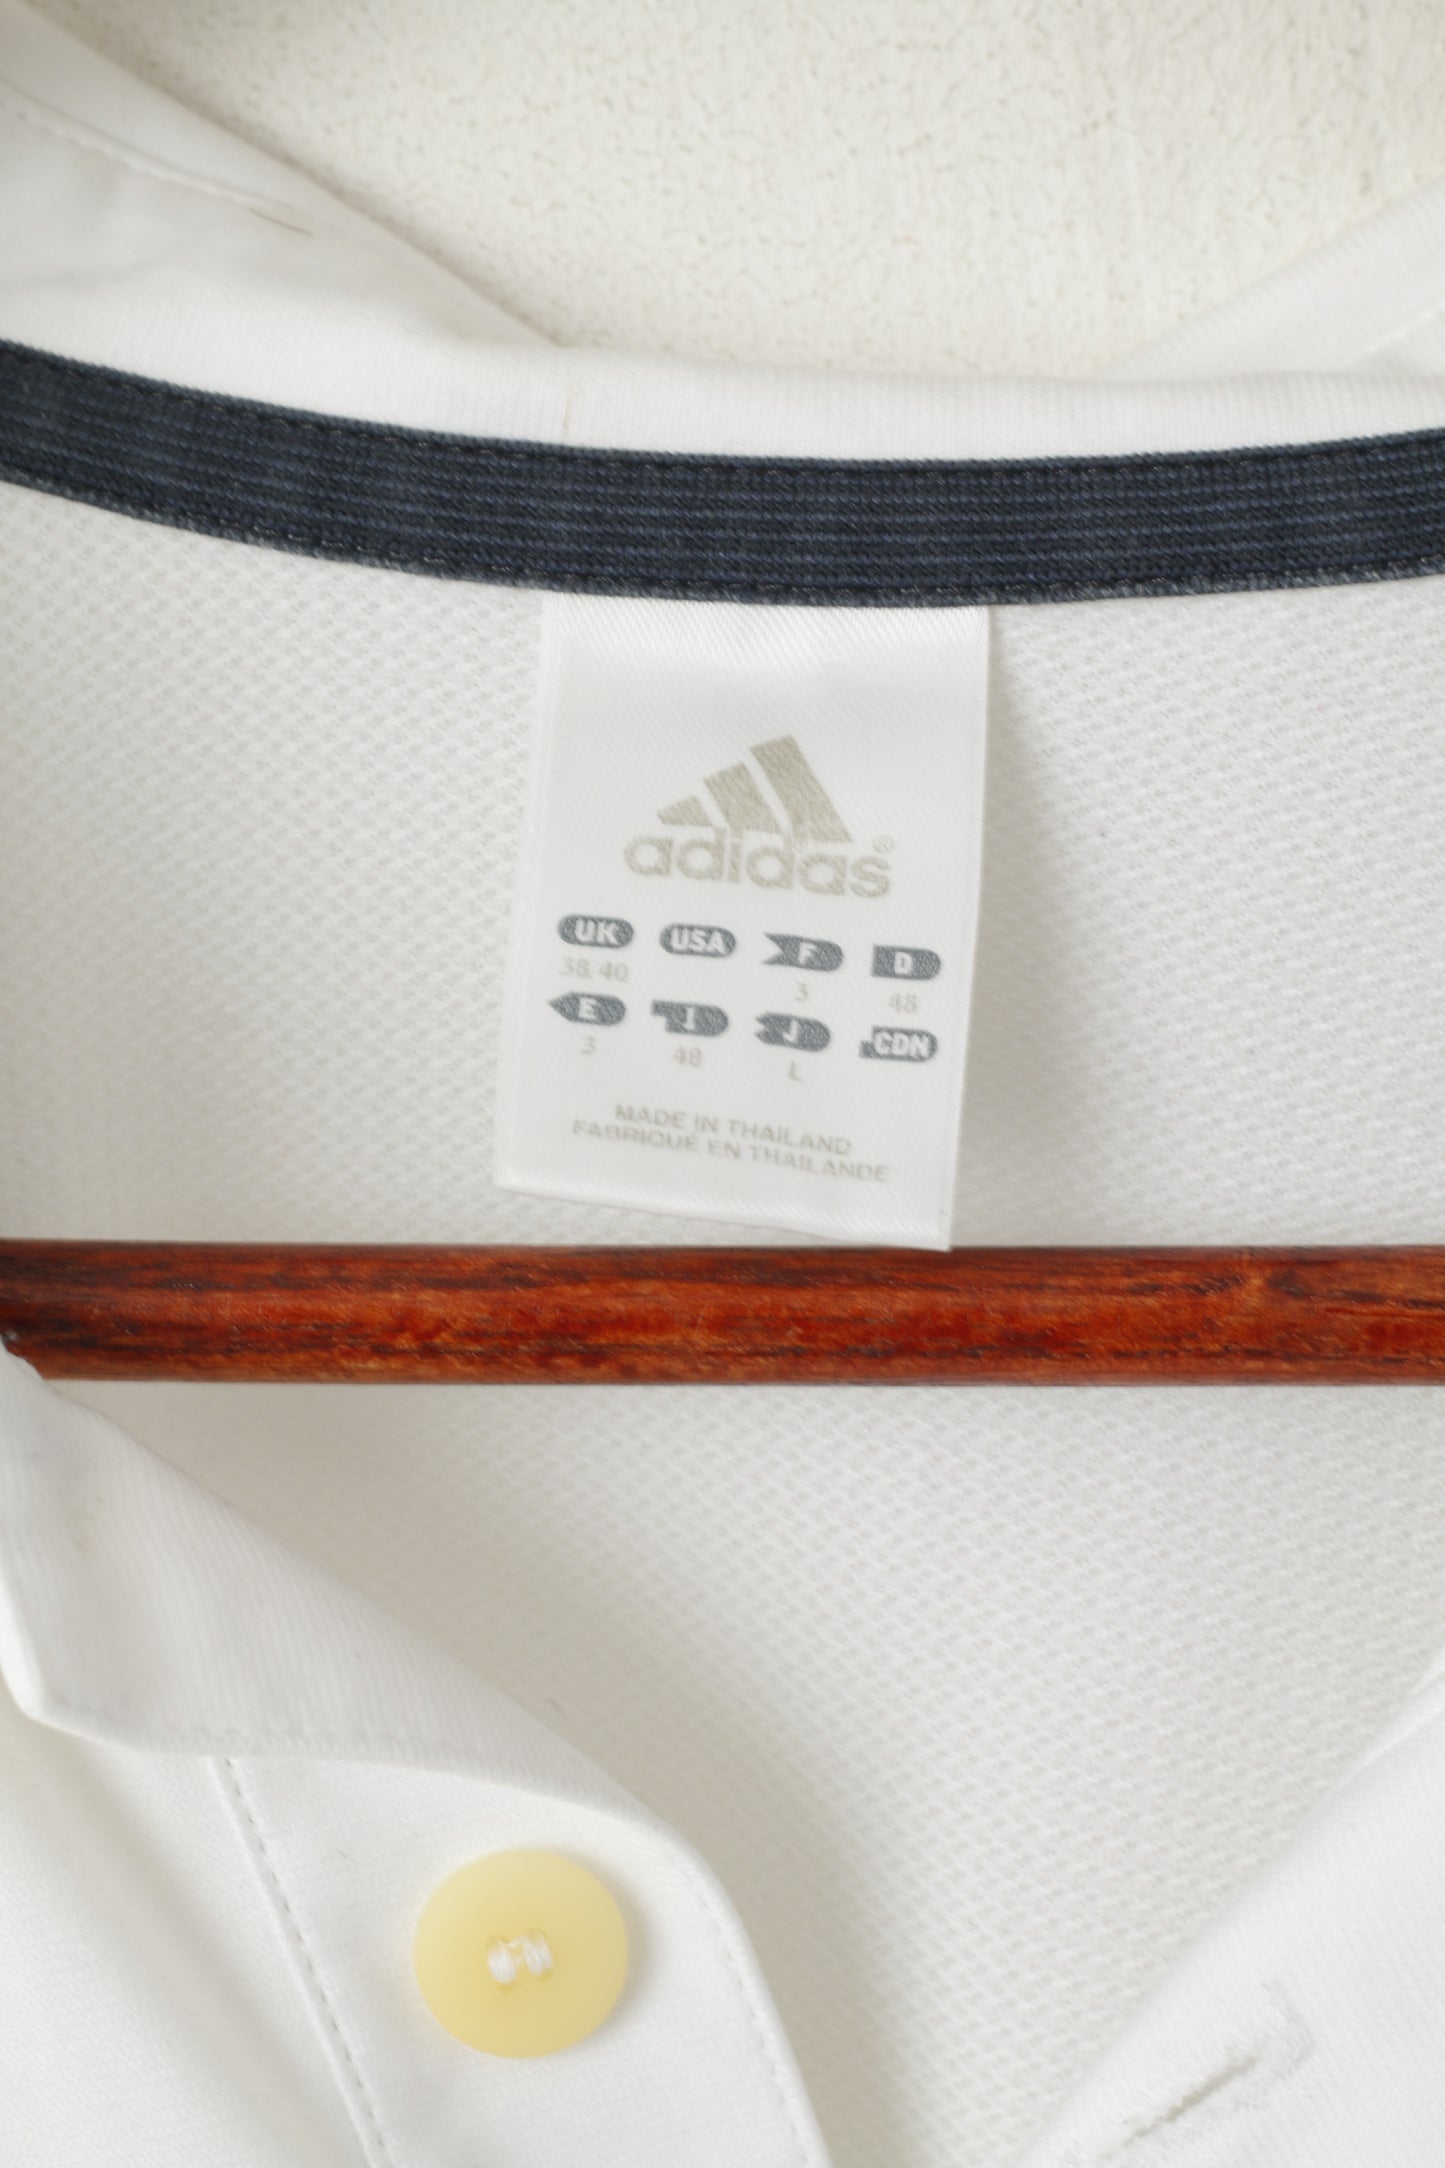 Adidas Men L Polo Shirt White Training Activewear Vintage Sport Jersey Top